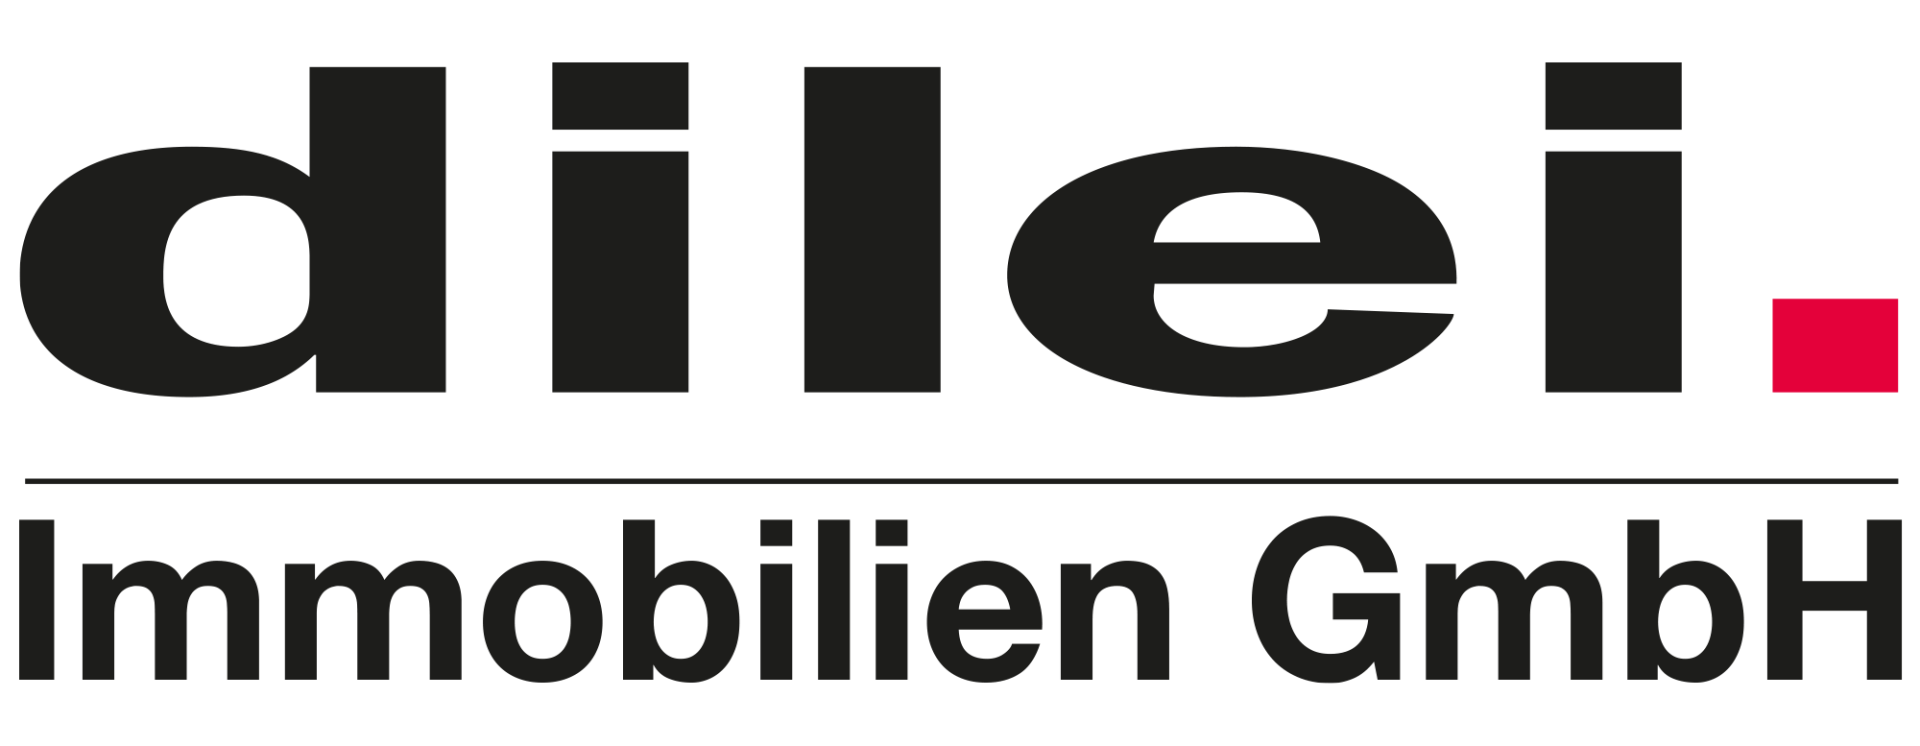 Dilei-Immobilien-GmbH-logo